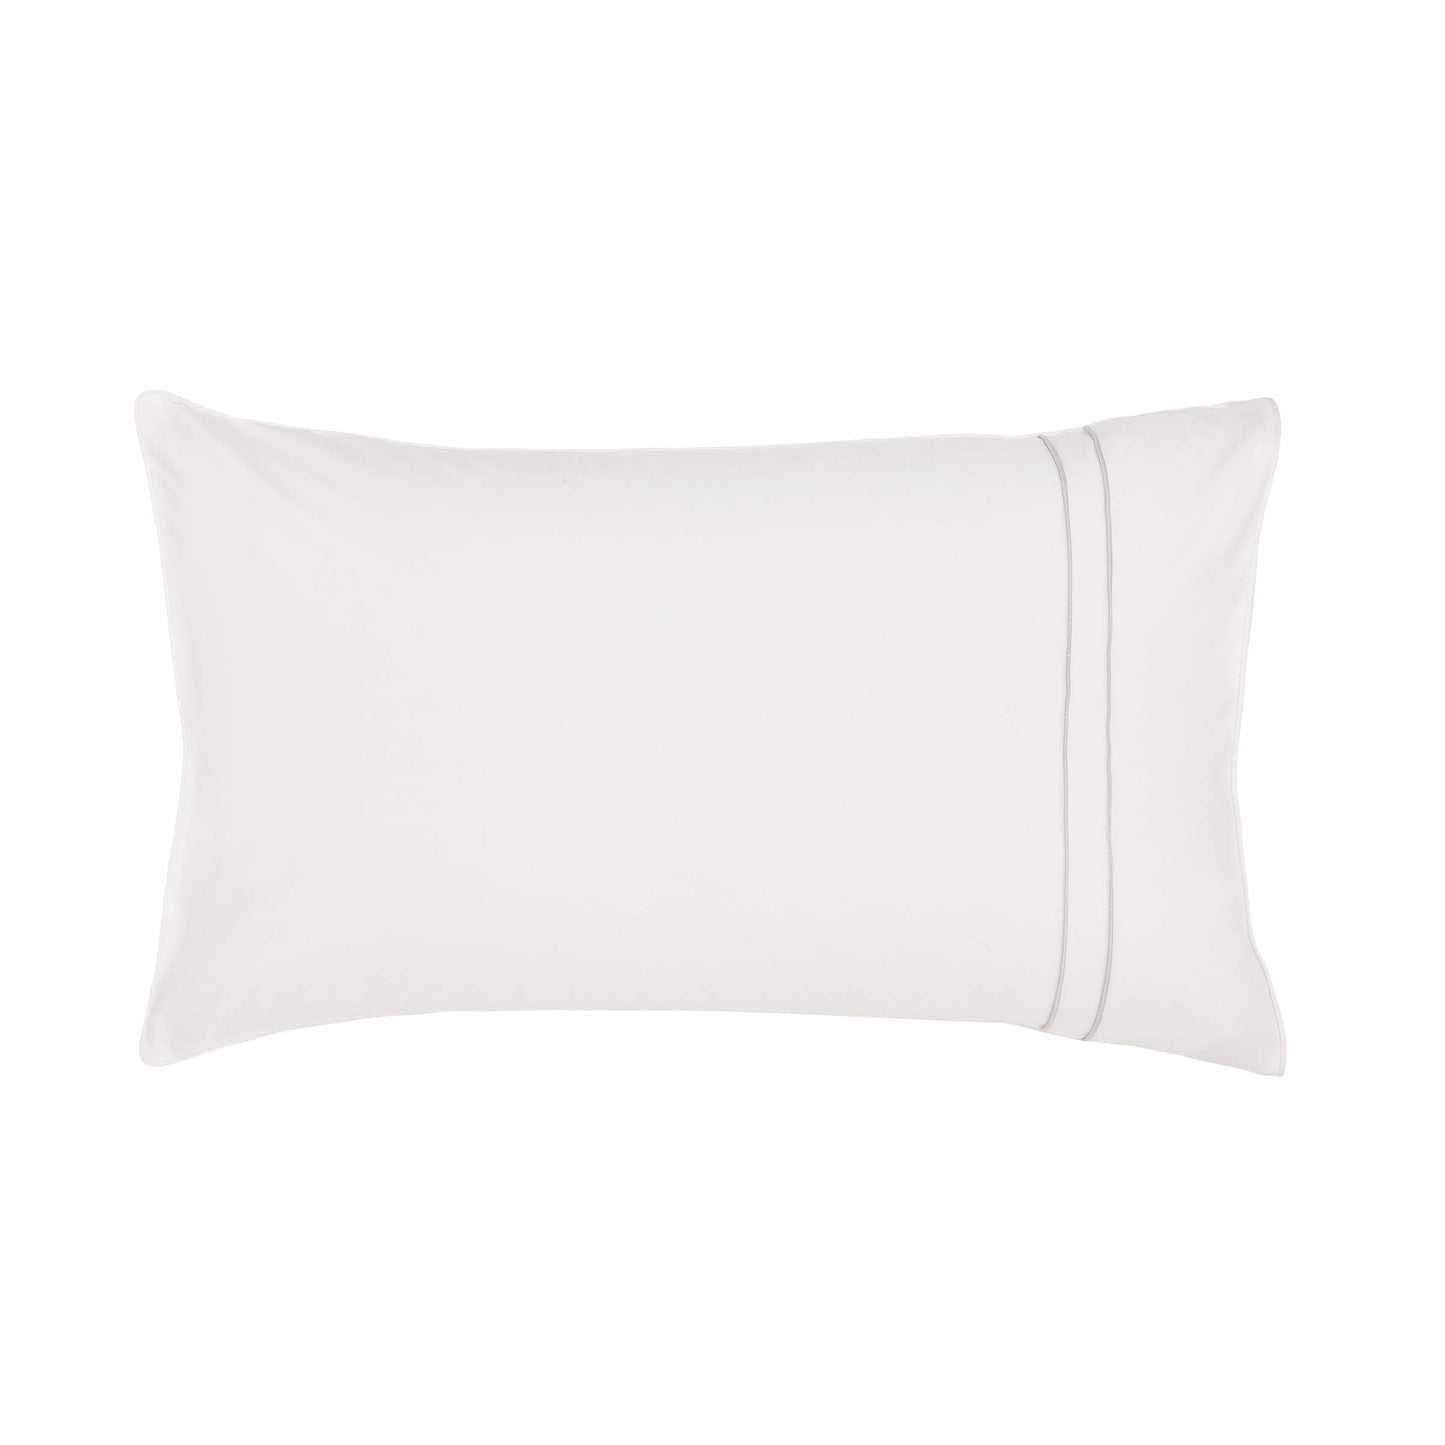 White Murmur Standard Pillowcase with Grey Pinstripe